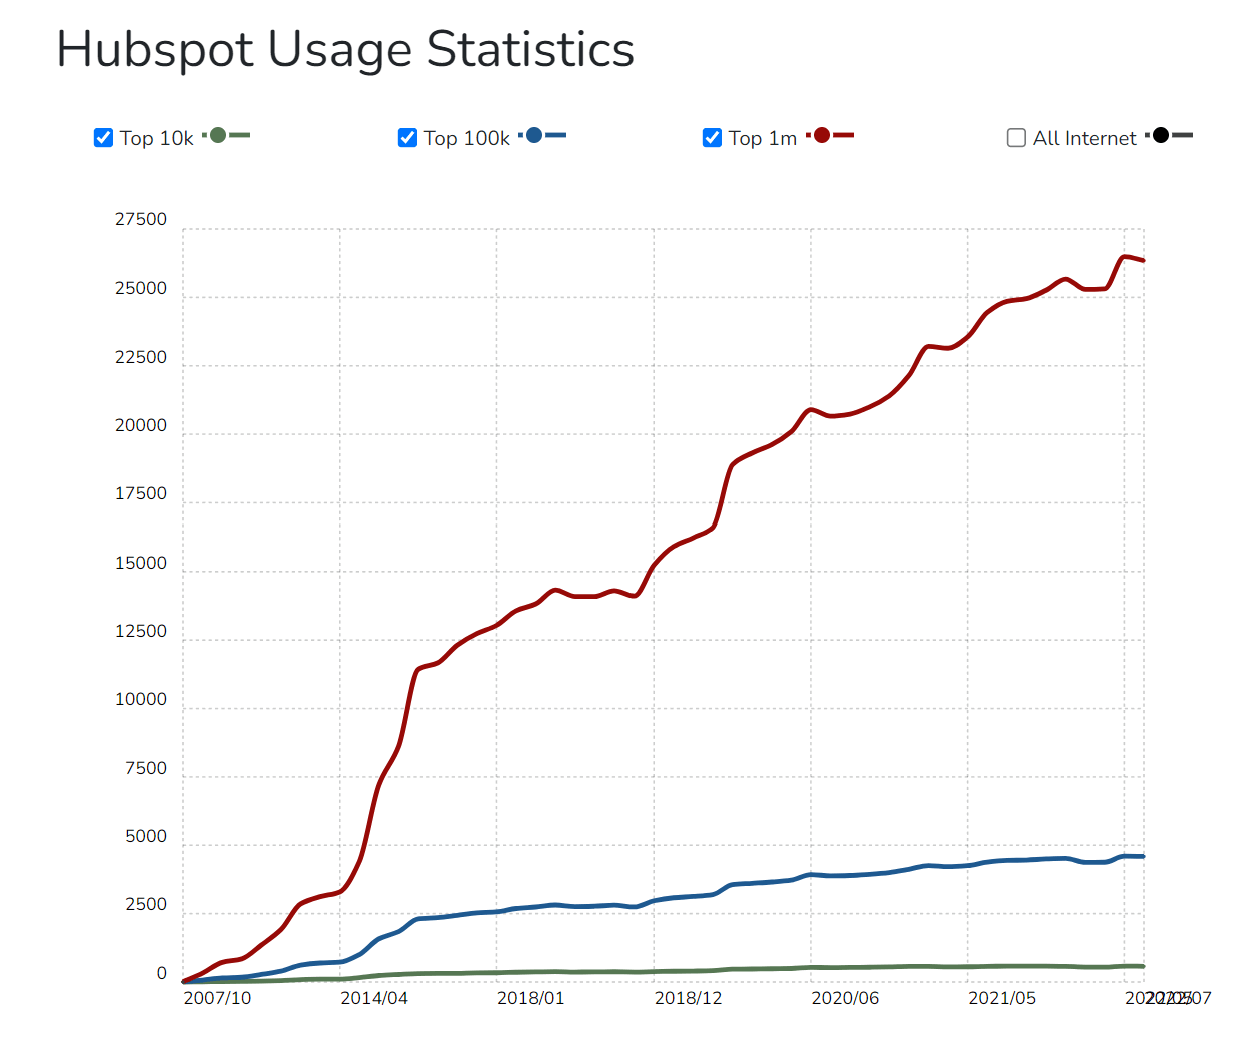 1,242,398 websites are HubSpot customers